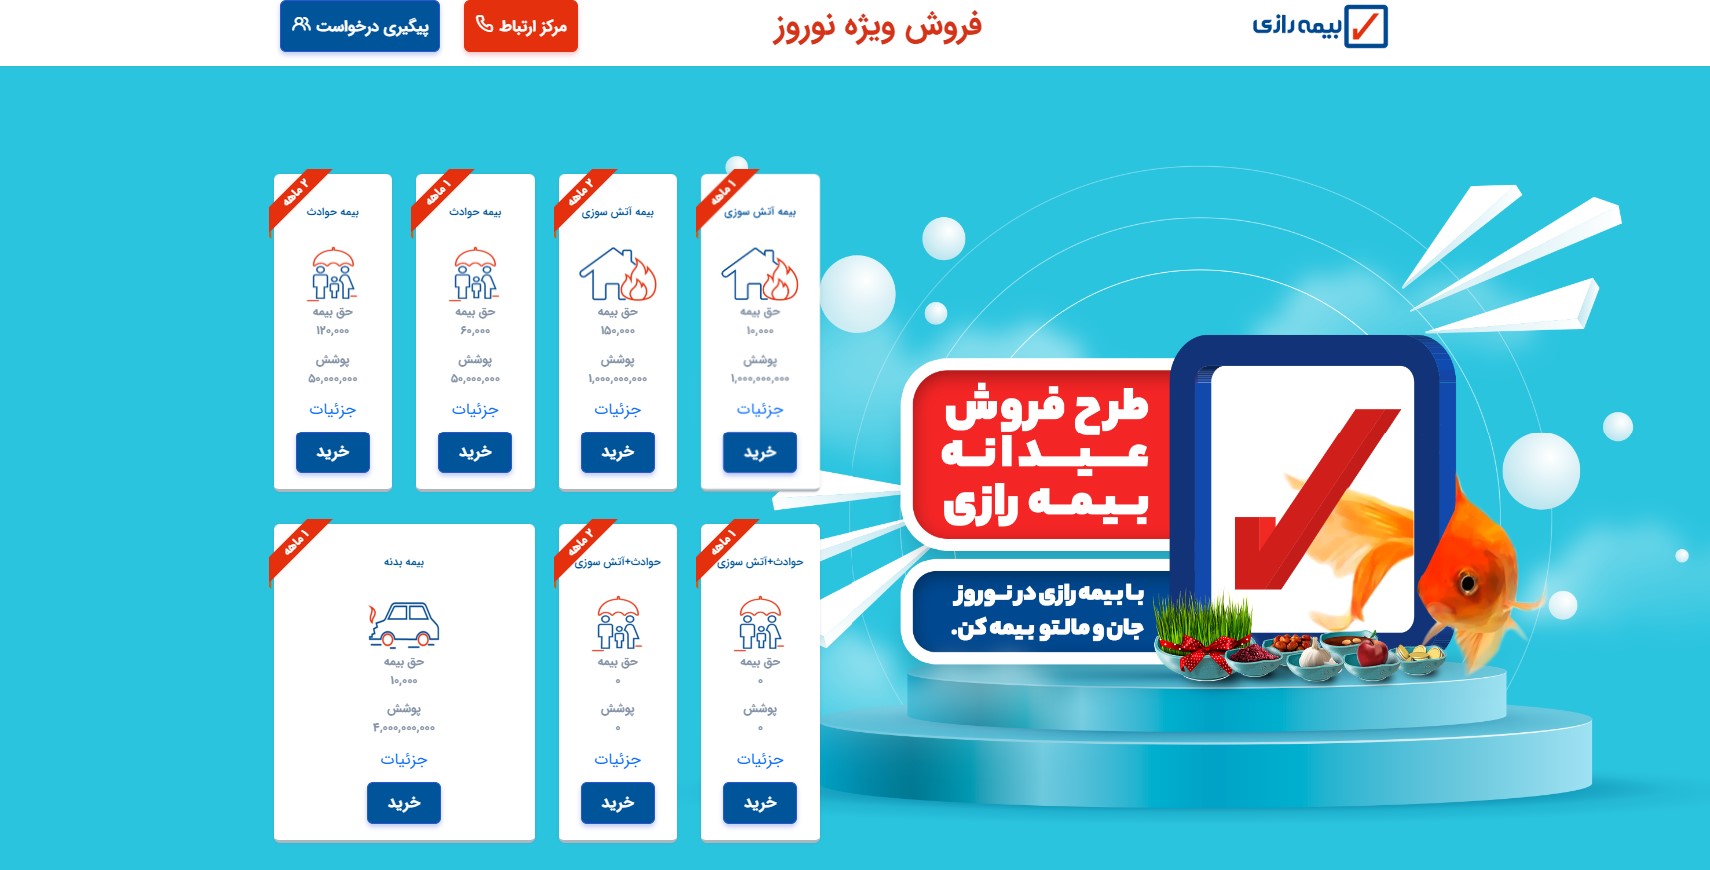 Sale of Nowruz insurance policies of Razi Insurance